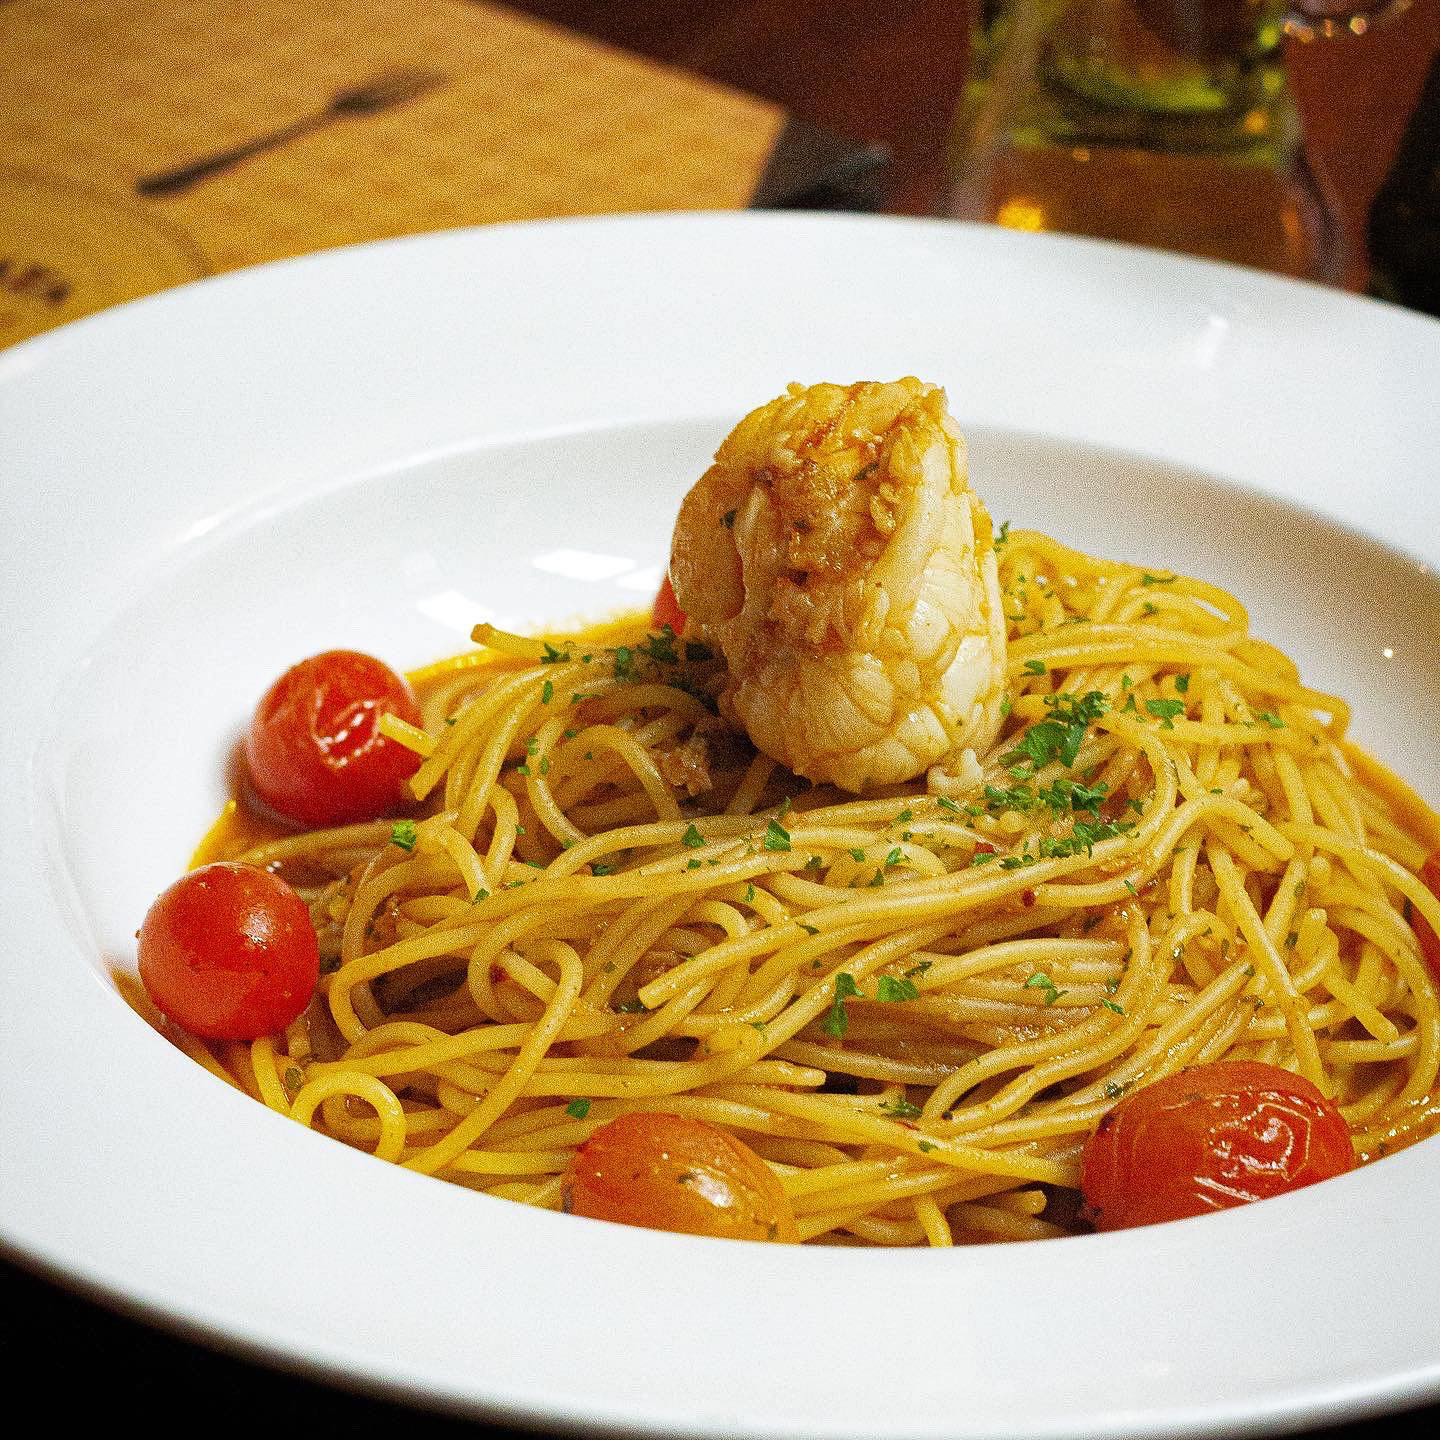 Best Italian Restaurants in KL and Selangor